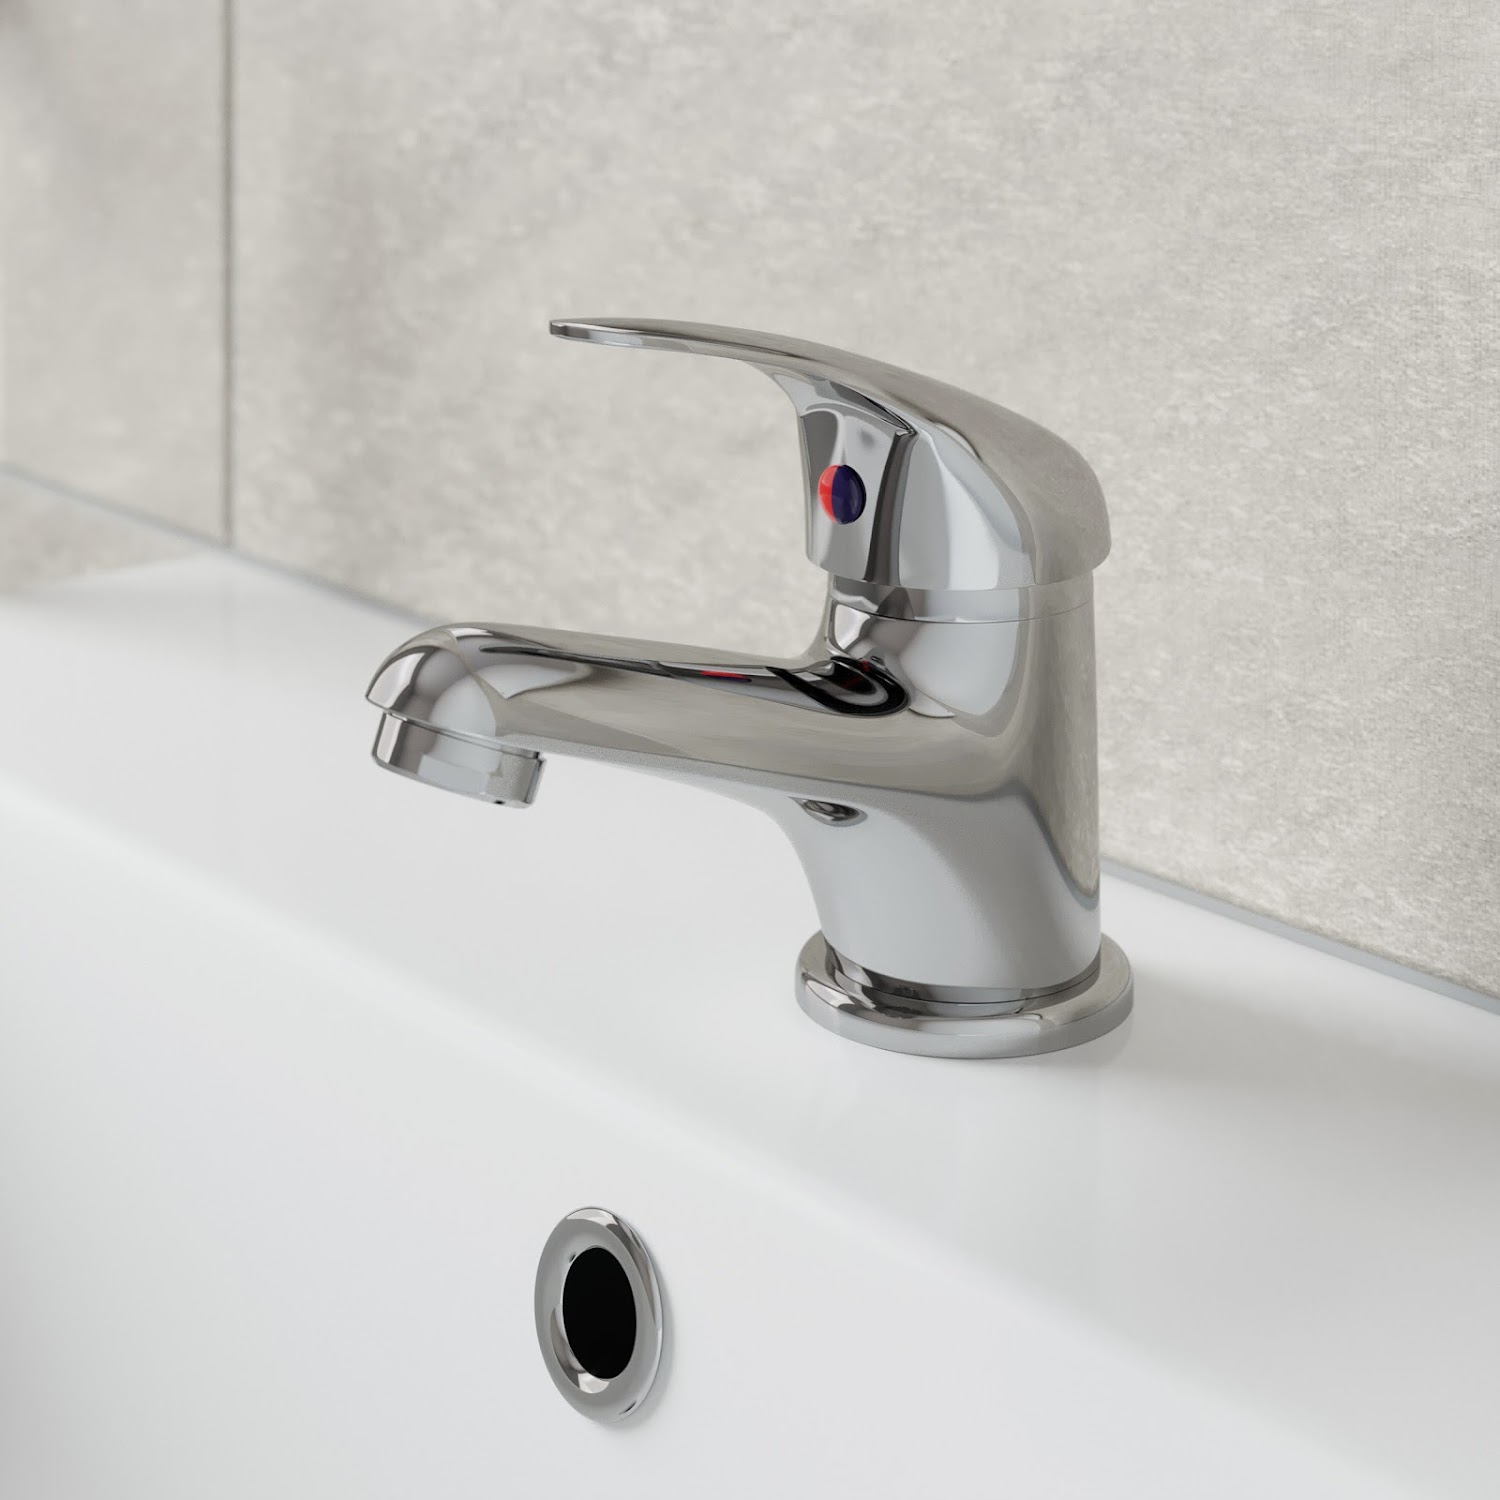 Bathroom Basin Sink Monobloc Mixer Tap Chrome Finish Curved Modern Single Lever 5056093610478 Ebay